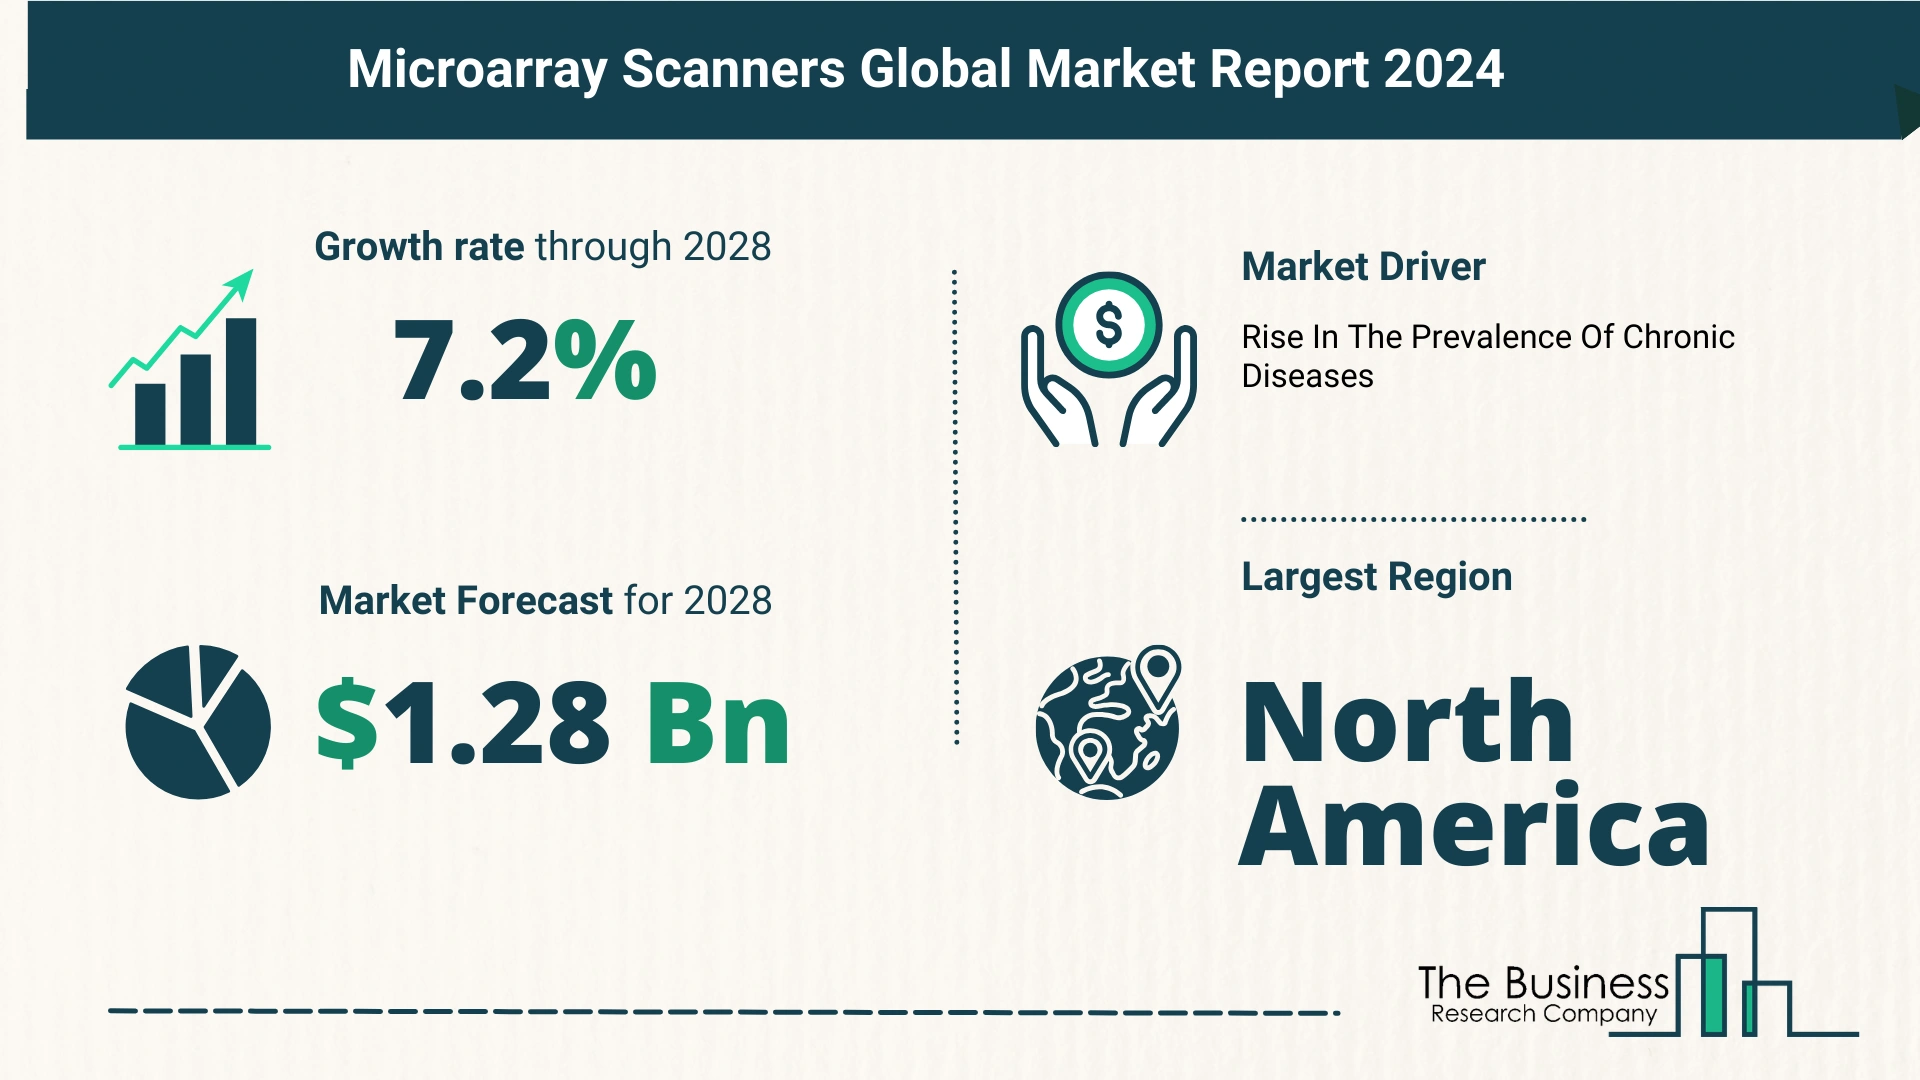 Global Microarray Scanners Market